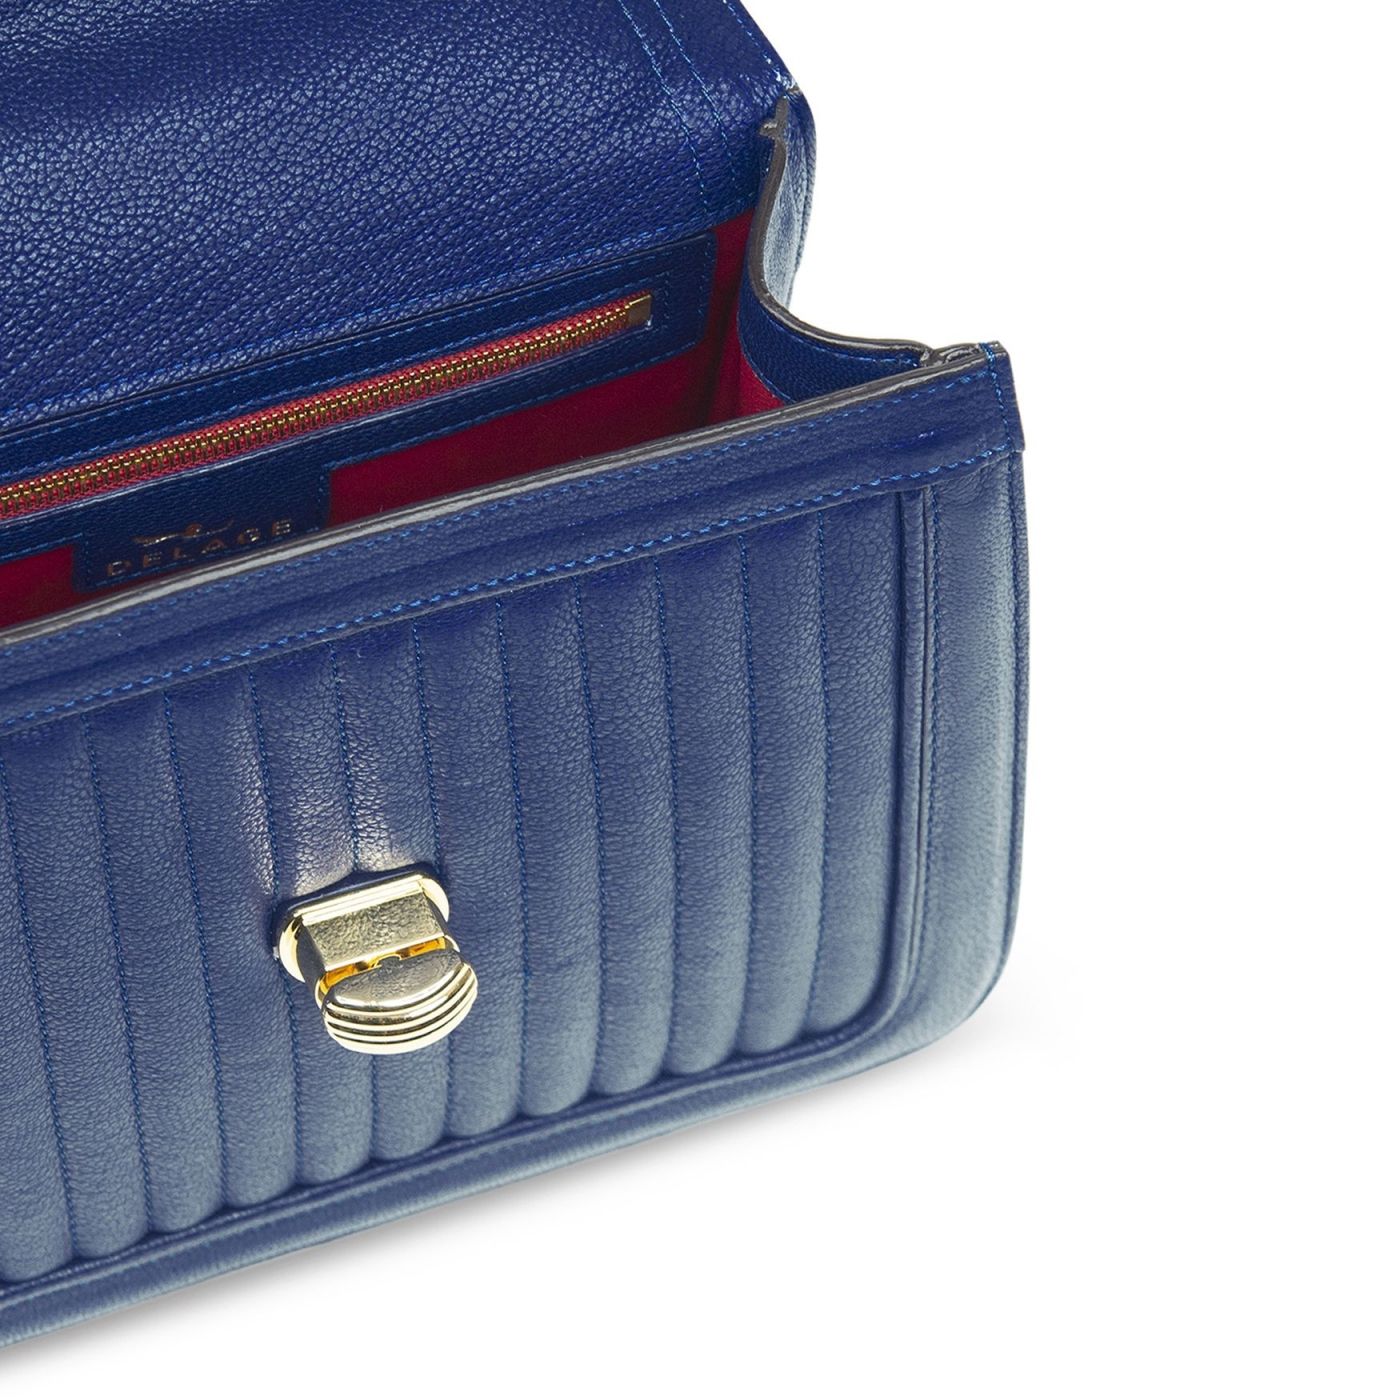 Handbag Ginette PM Blue saphir